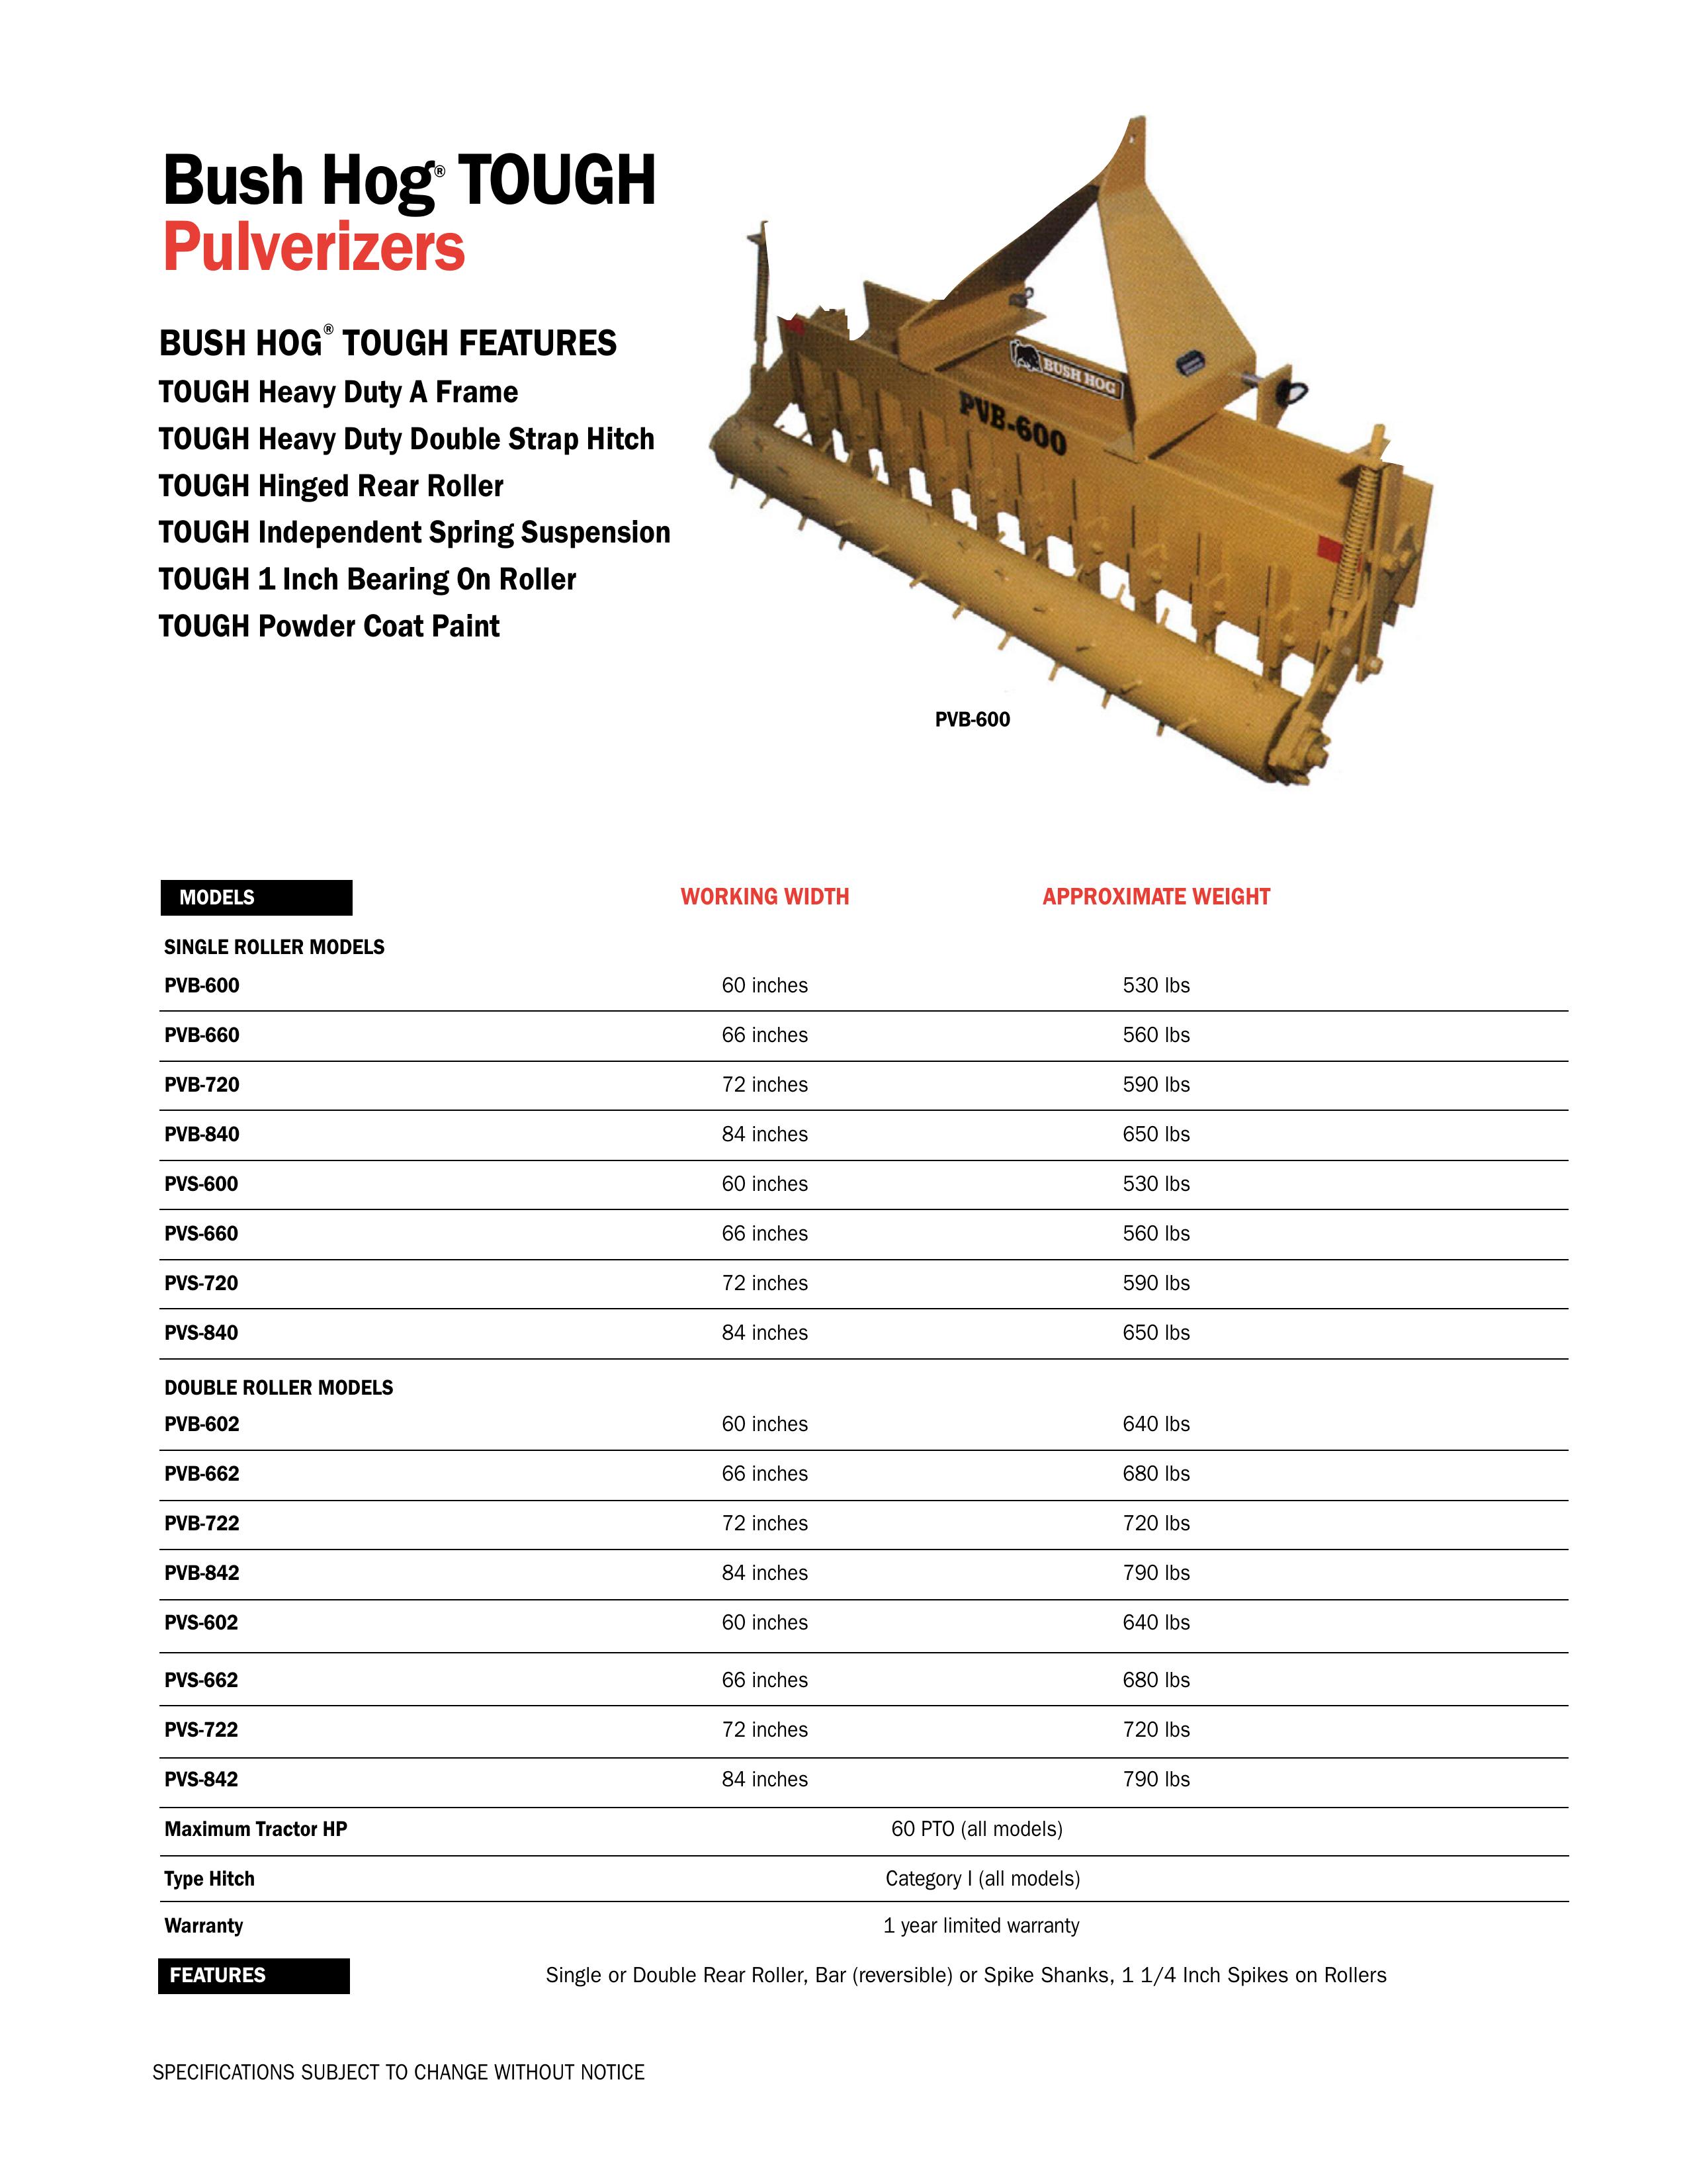 Bush Hog PVs-602 Lawn Aerator User Manual